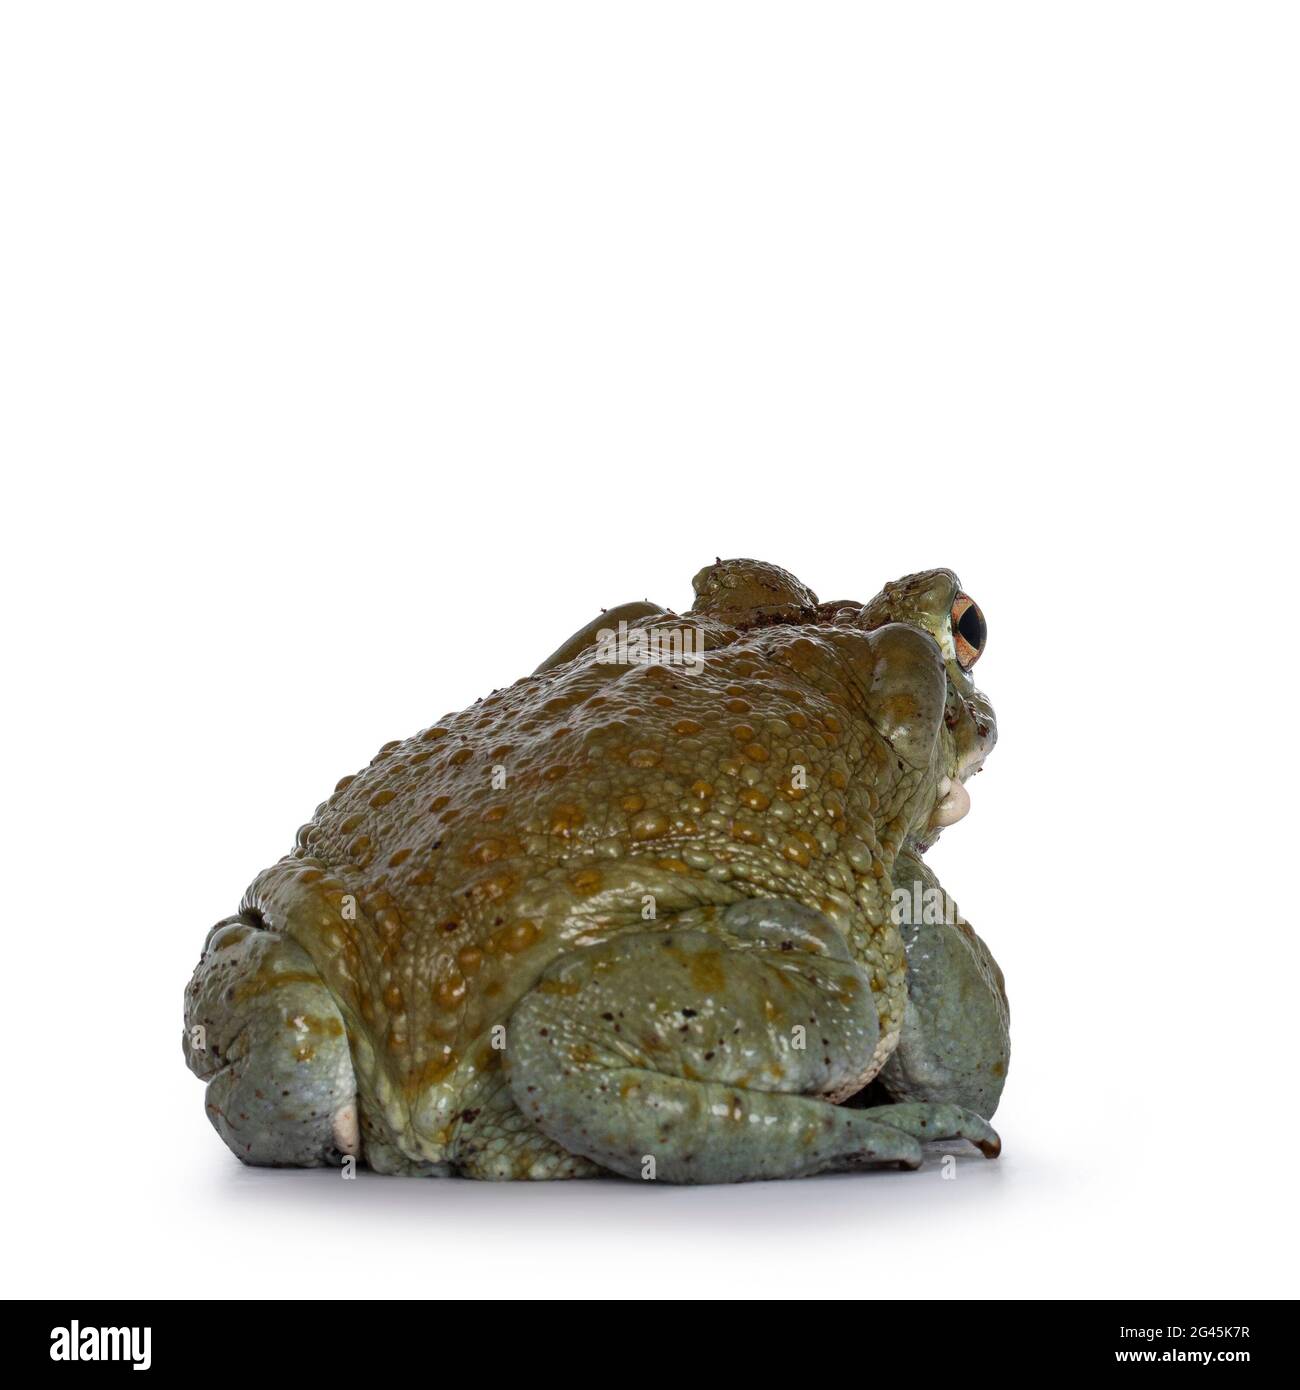 Bufo Alvarius aka Colorado River Toad, sitting backwards.Isolated on white background. Stock Photo